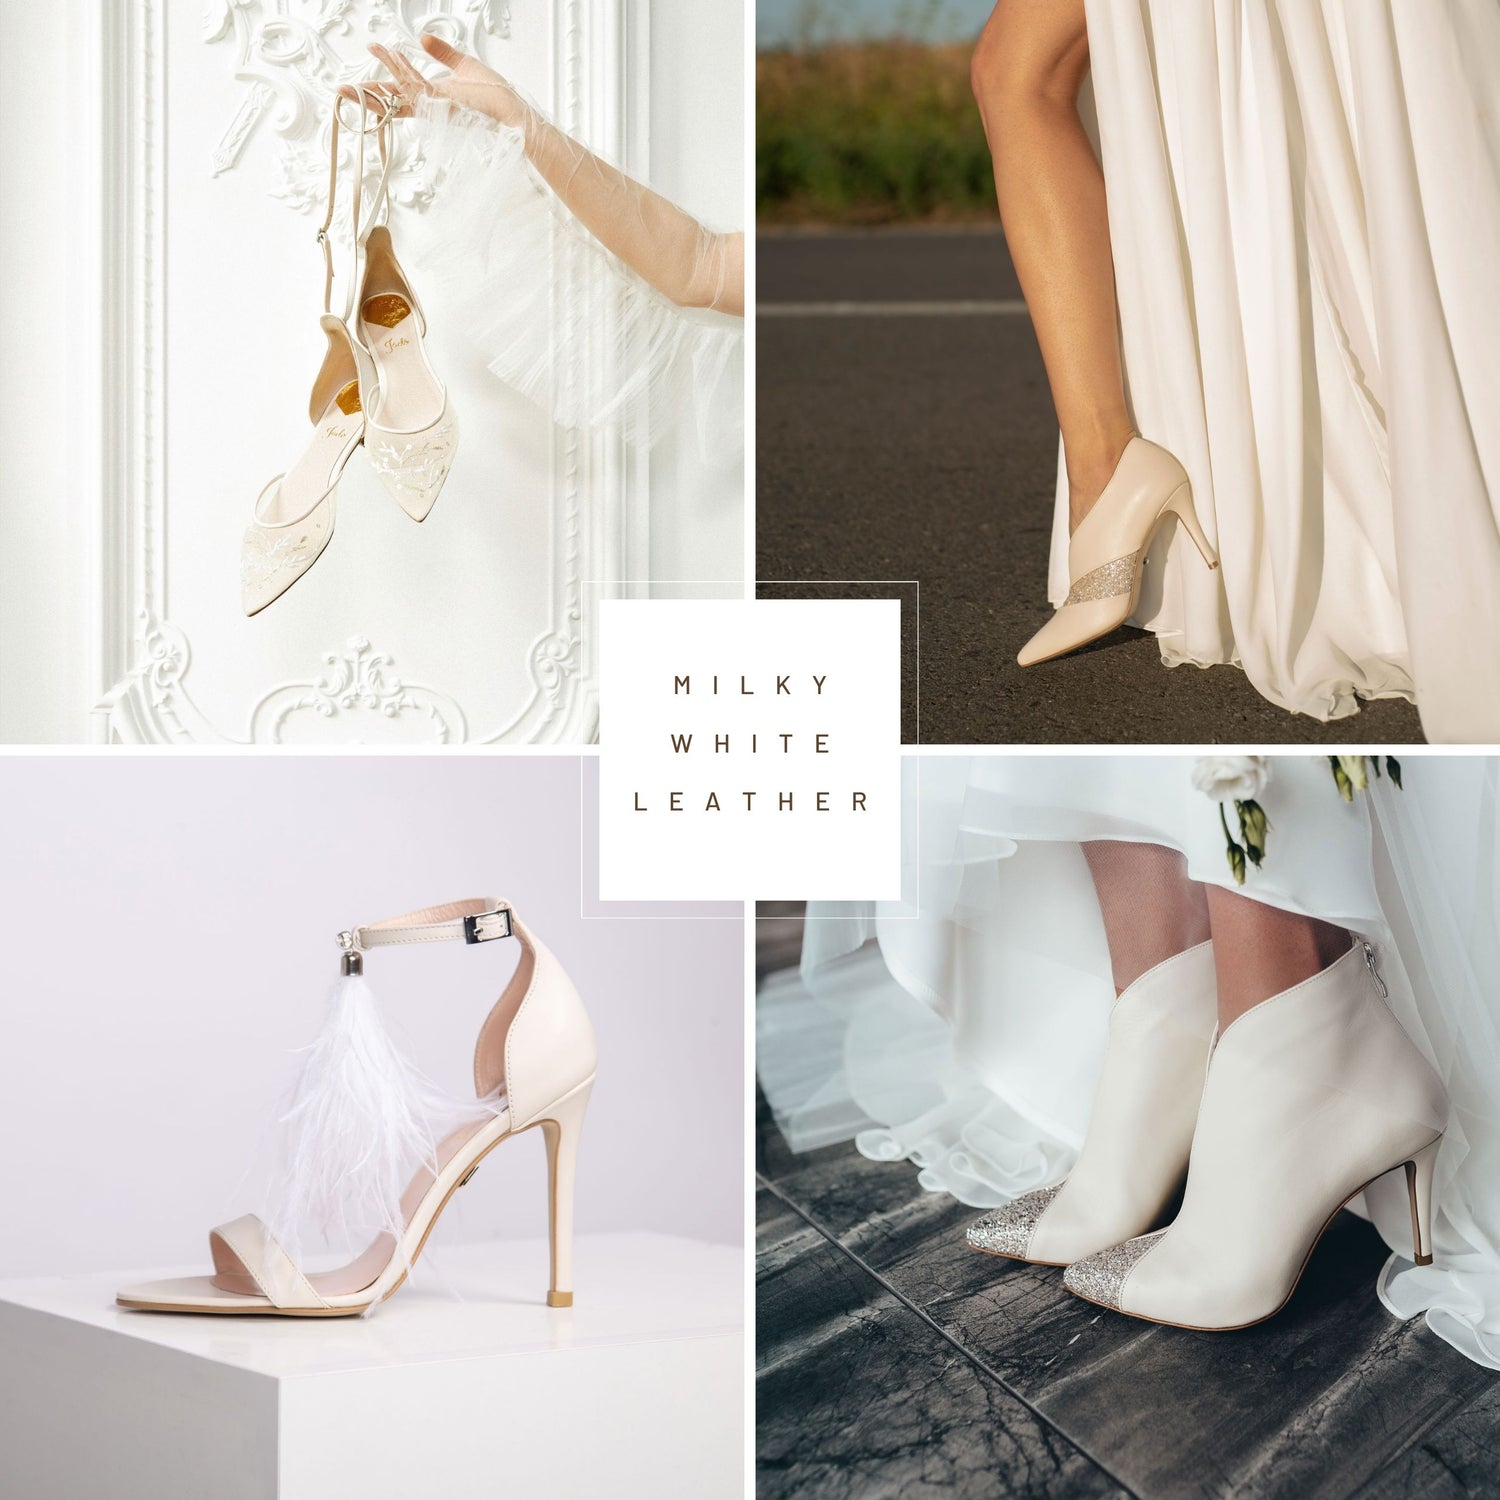 sandra-wedding-shoes